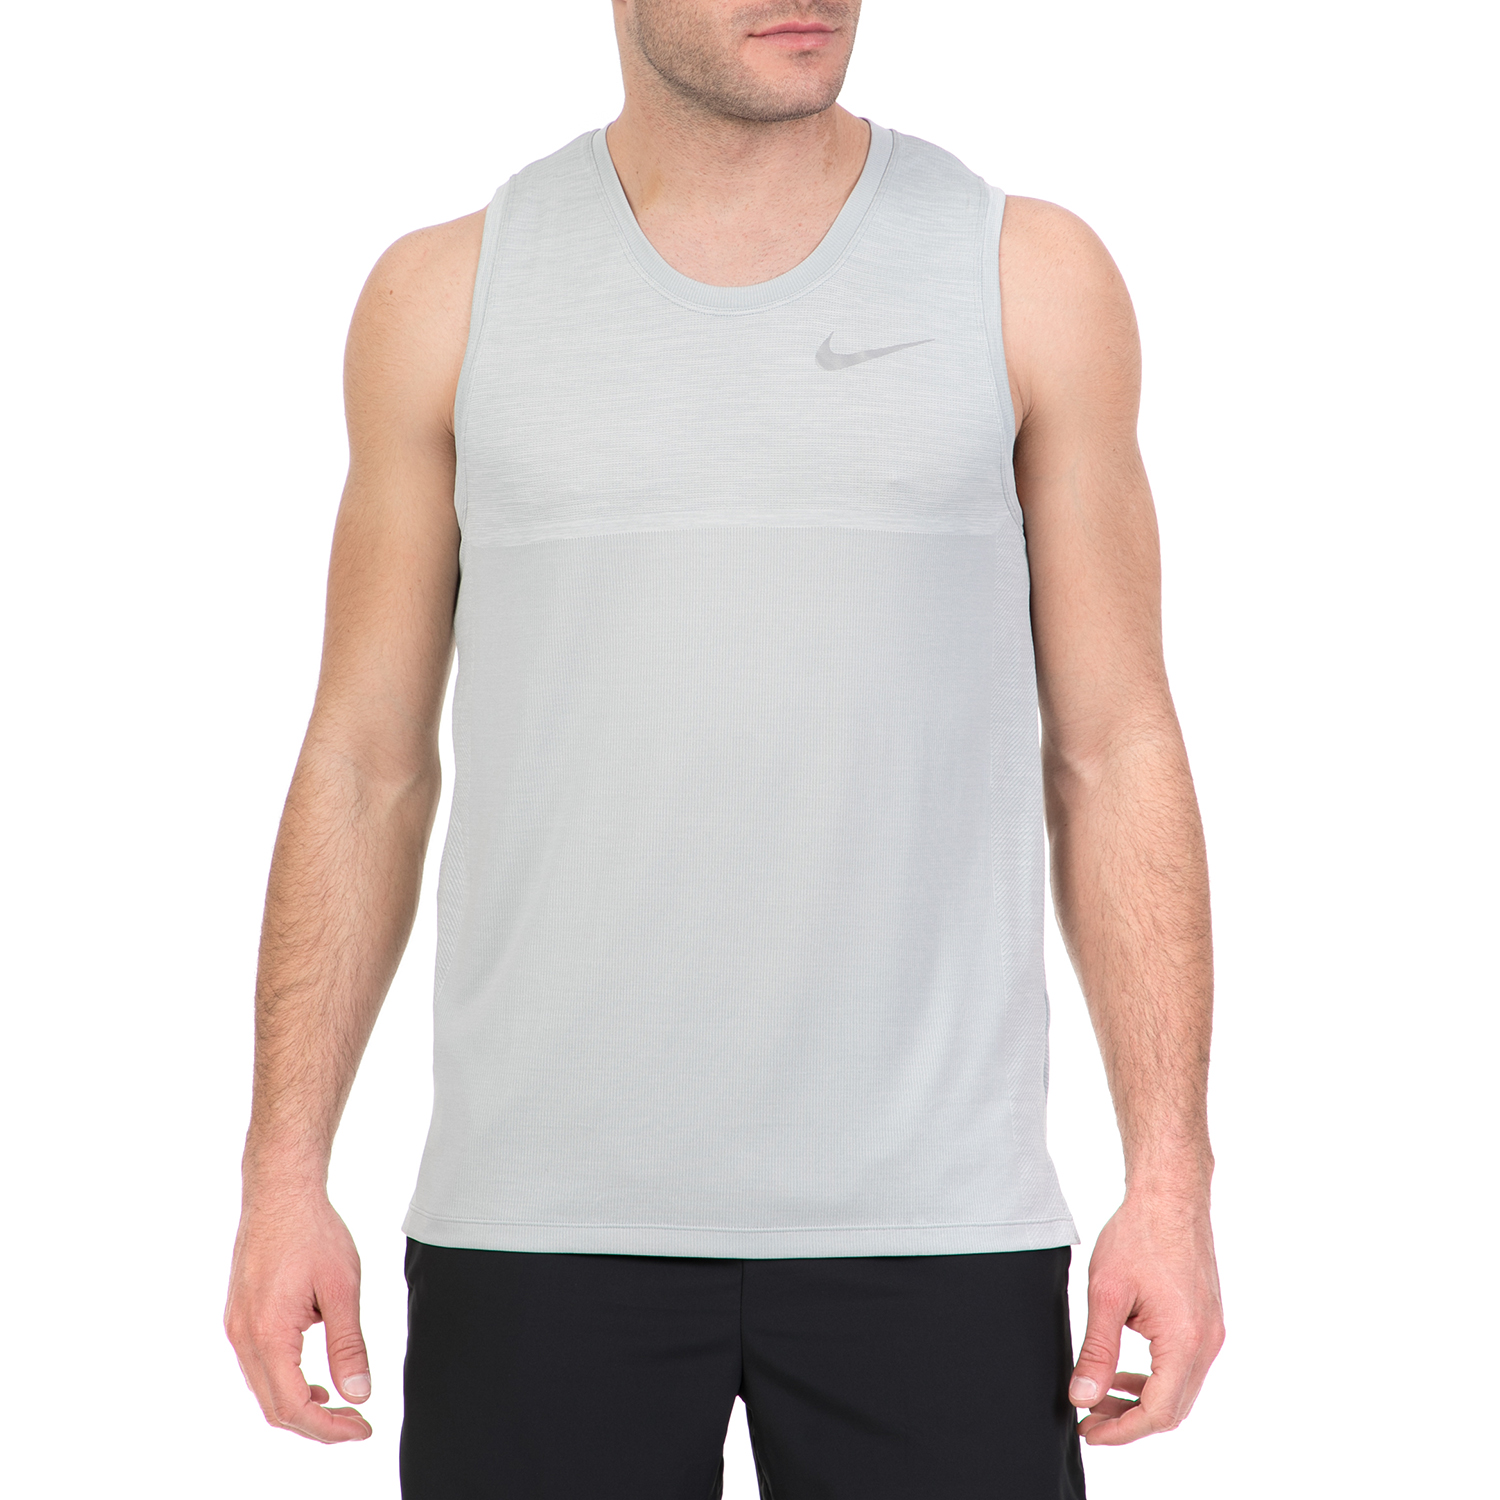 NIKE - Ανδρική αμάνικη μπλούζα NIKE DRY MEDALIST εκρού-γκρι Ανδρικά/Ρούχα/Μπλούζες/Αμάνικες